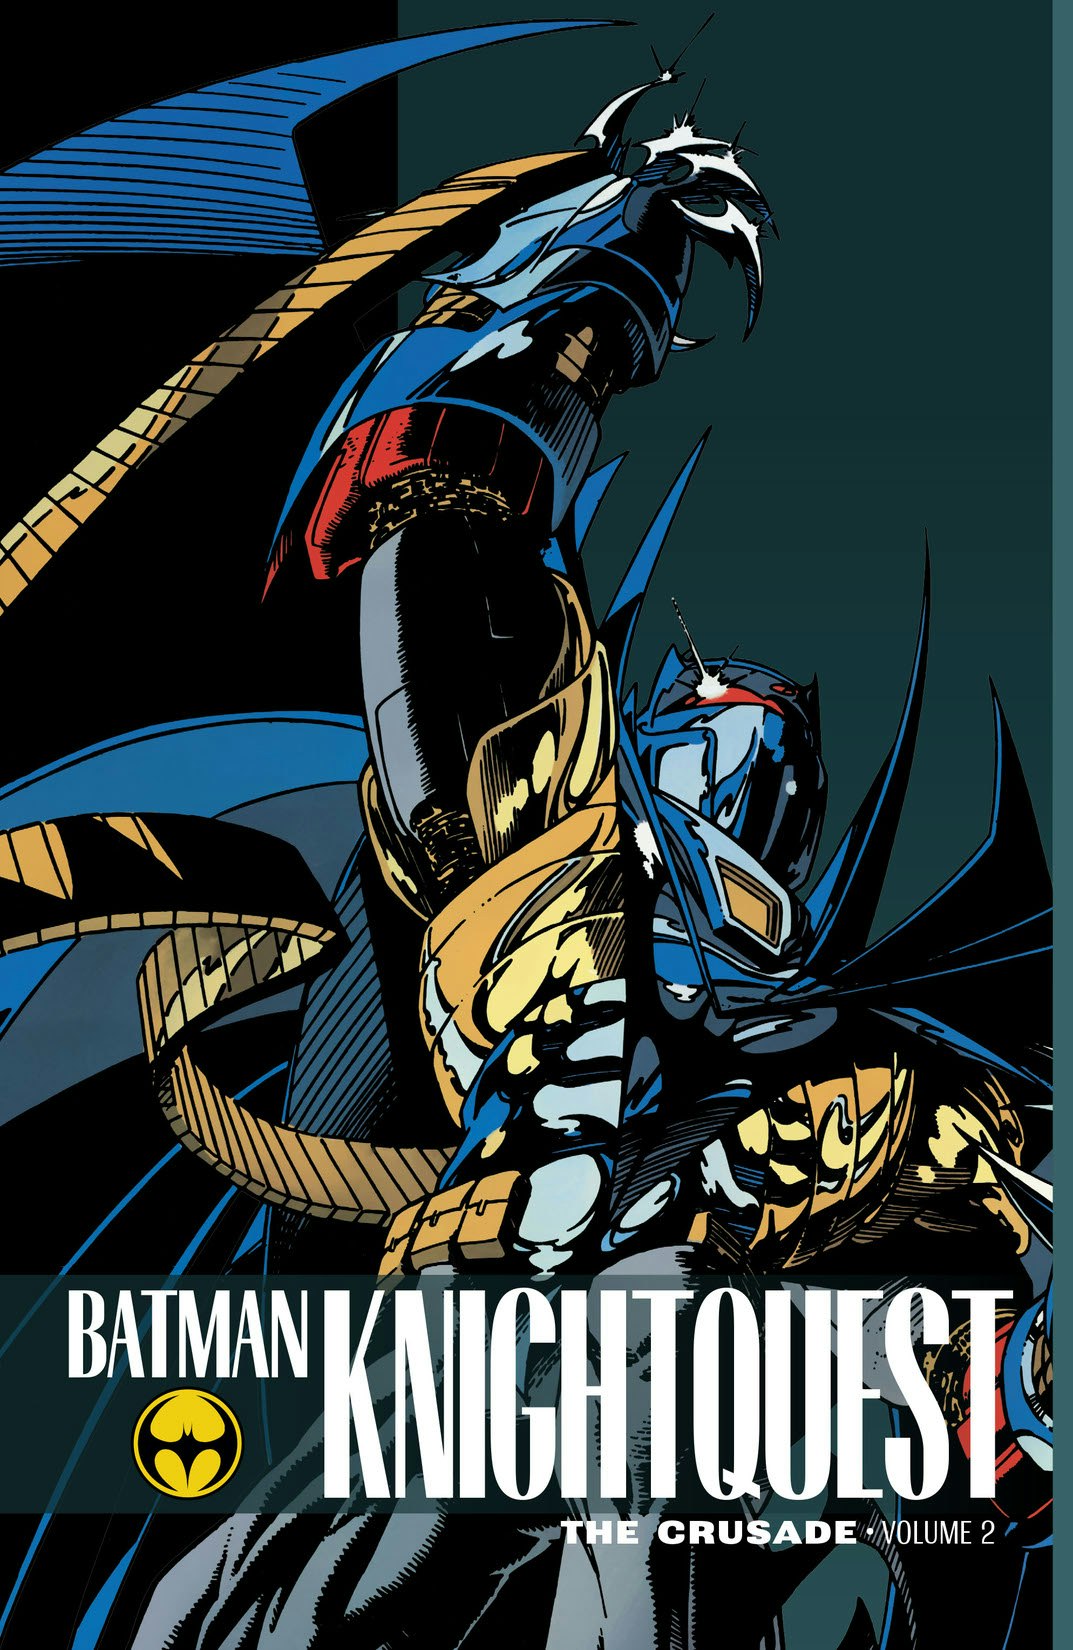 Batman: Knightquest: The Crusade Vol. 2